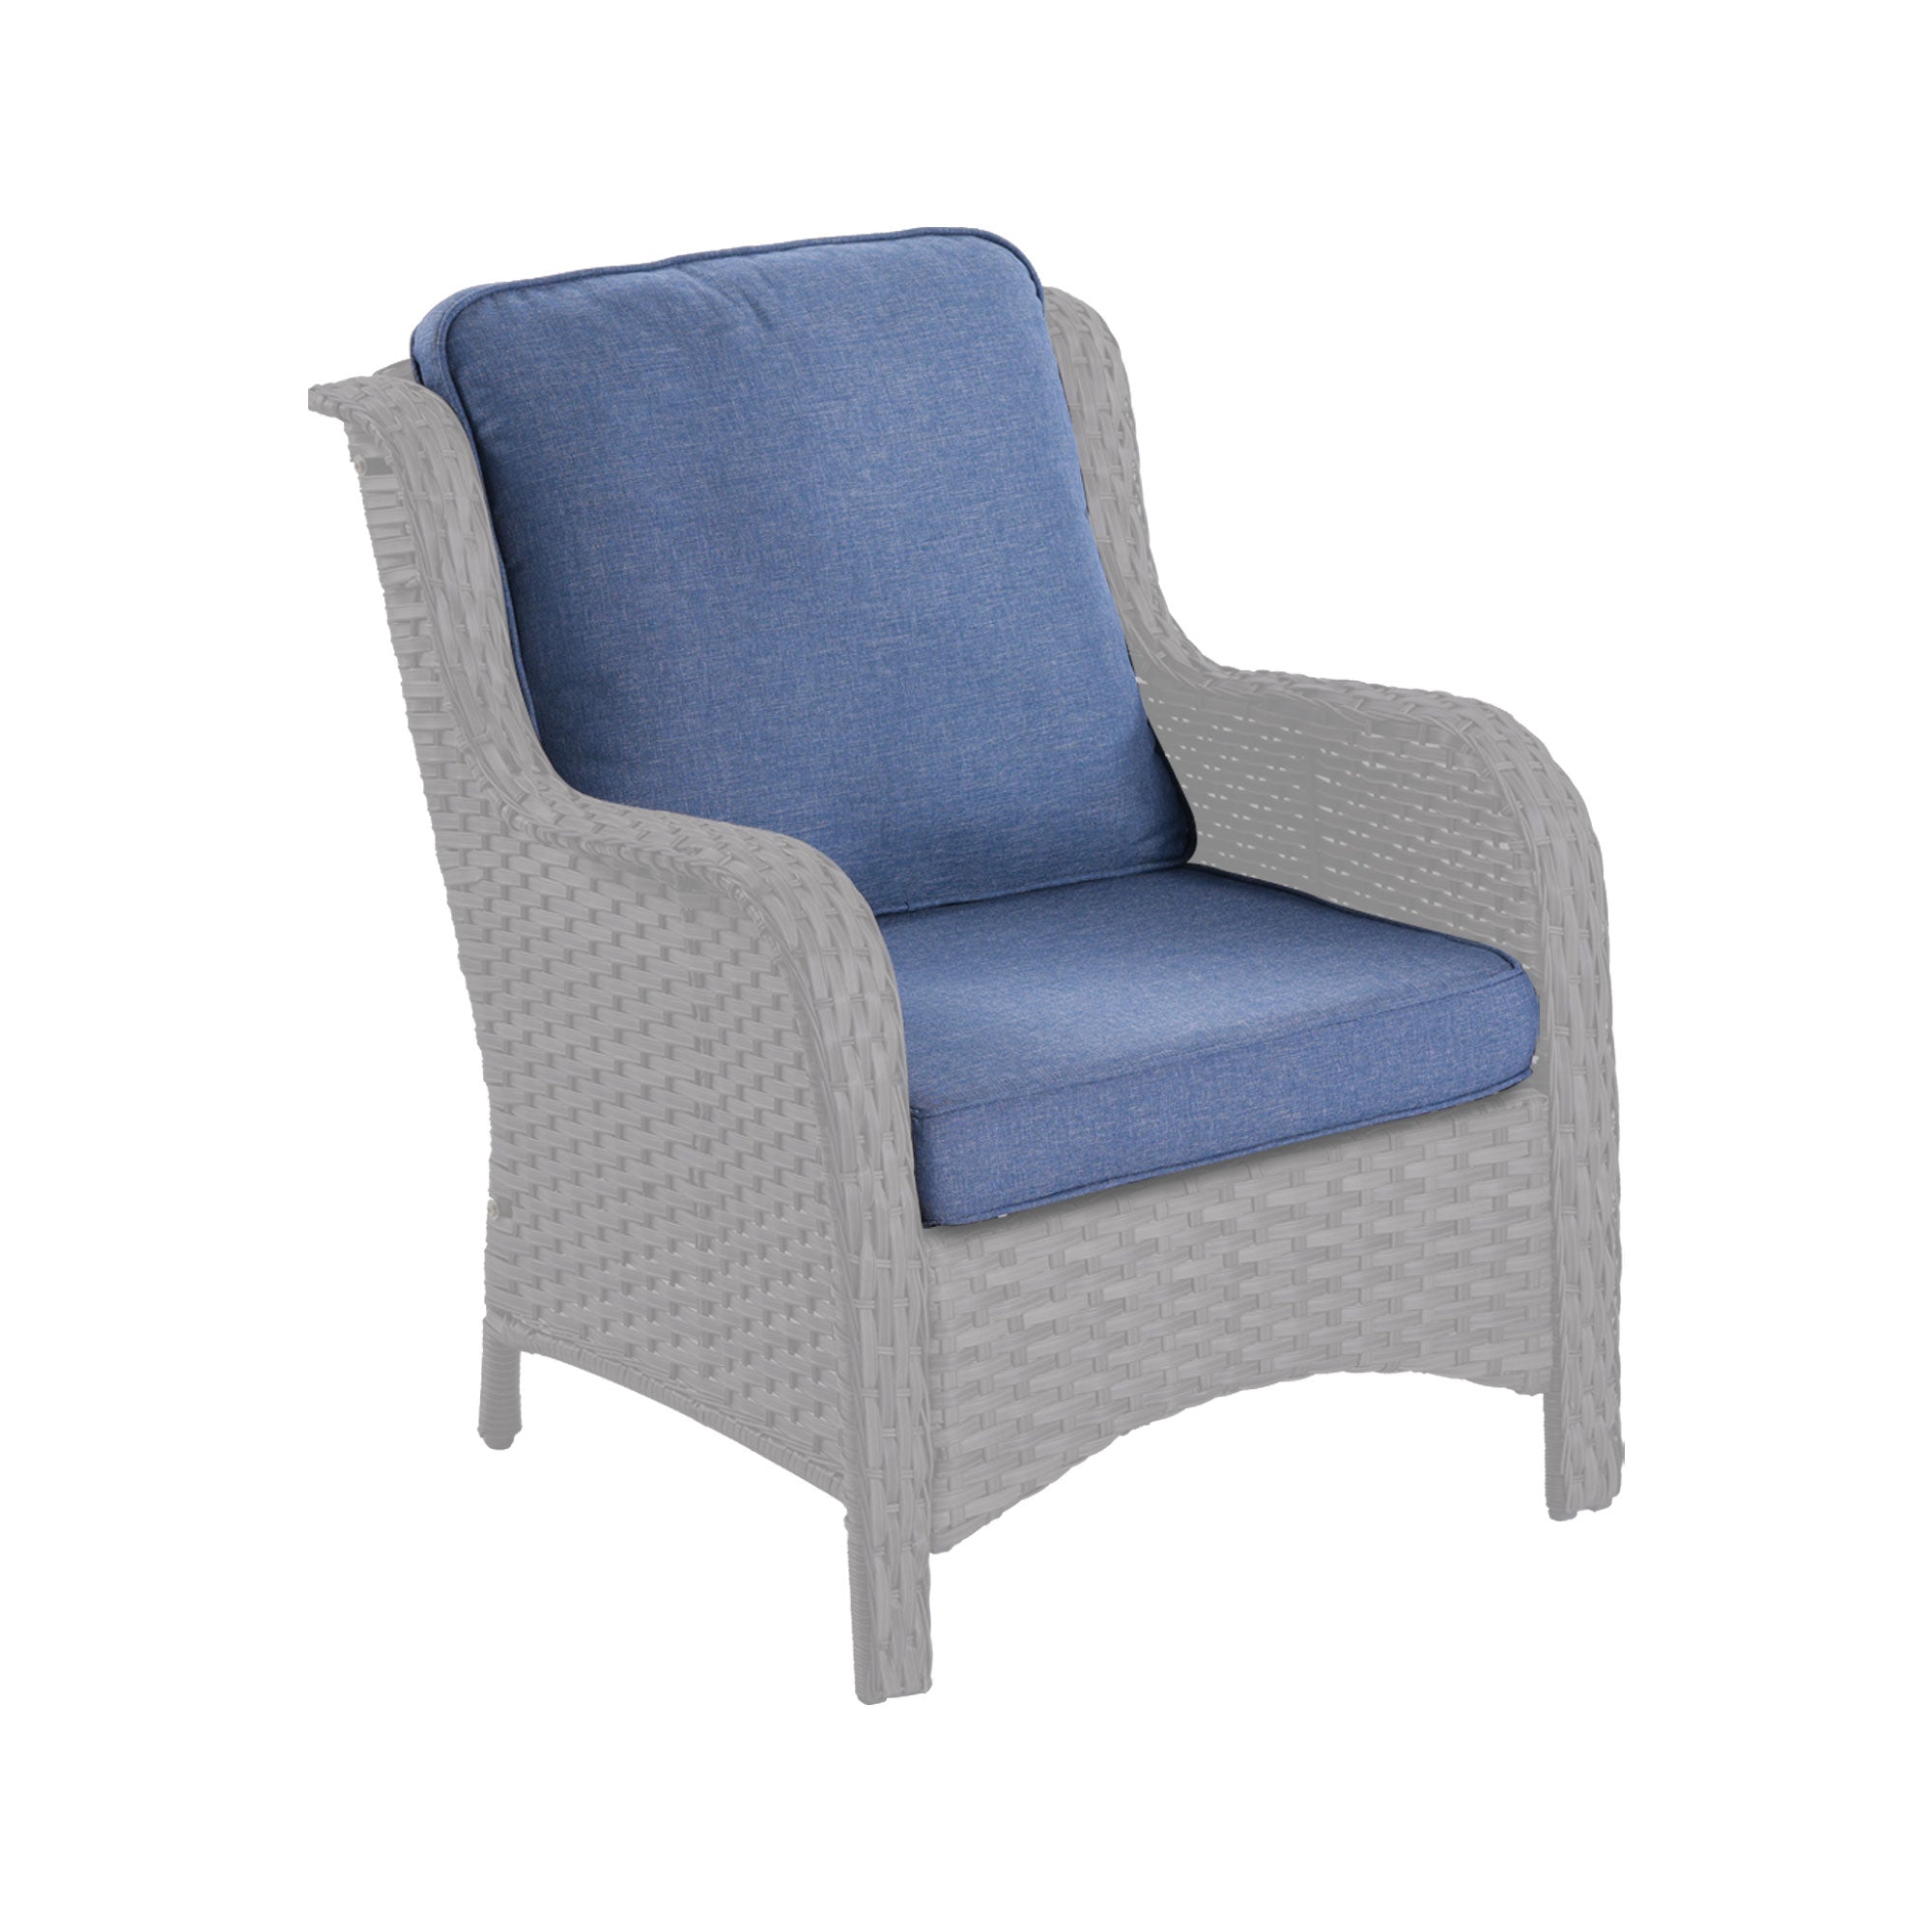 #Color_Denim Blue|Type_Seat&Back Cushion